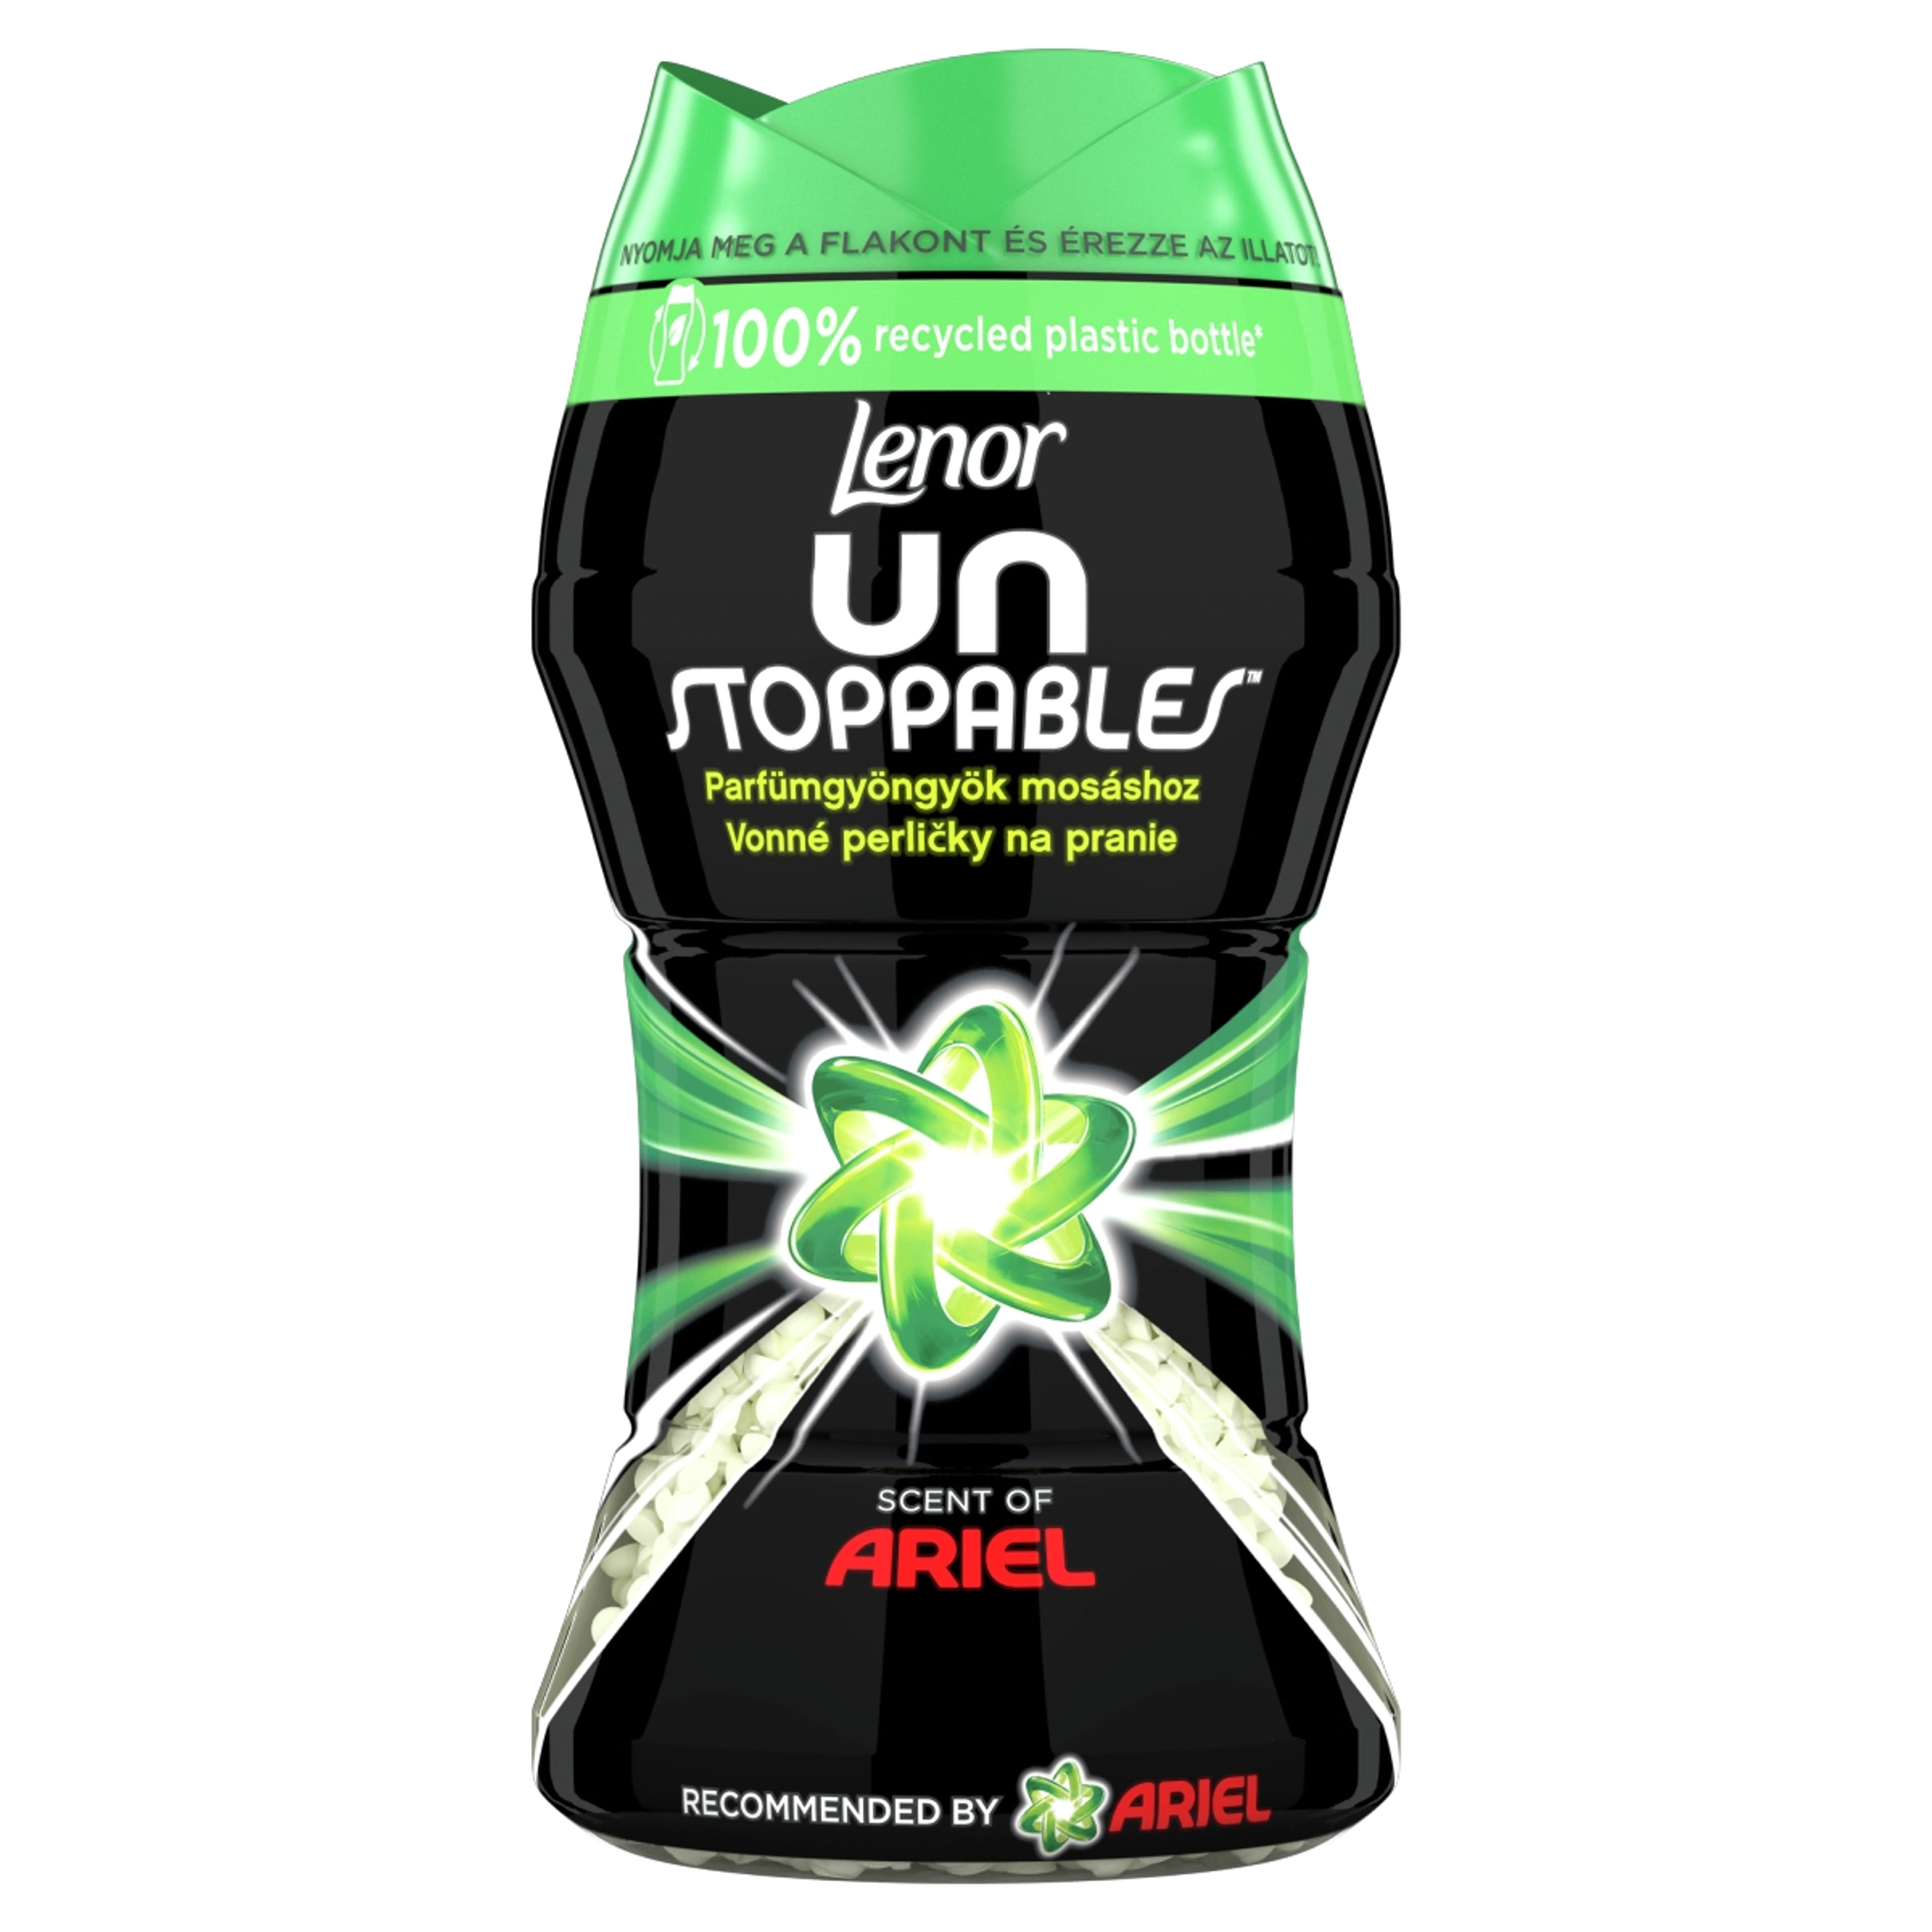 Lenor Unstoppables parfümgyöngyök,  Ariel illattal - 140g-1